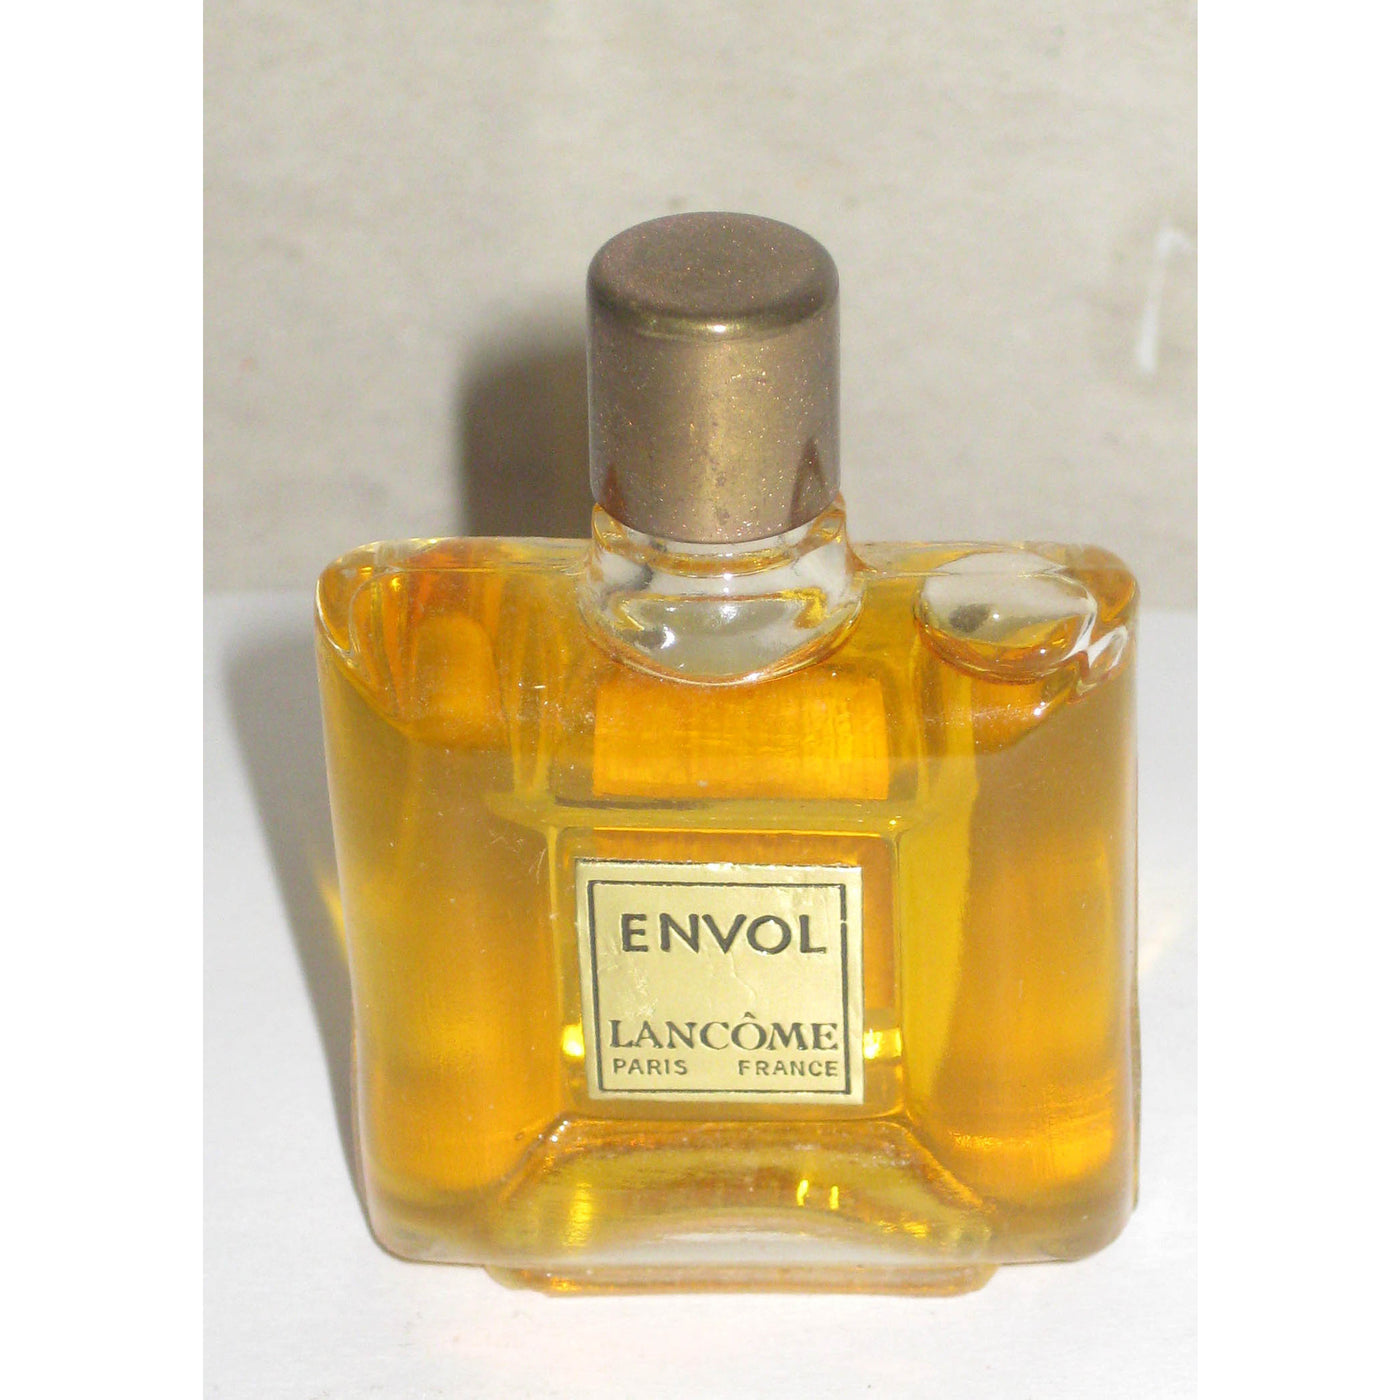 Vintage Lancome Envol Perfume